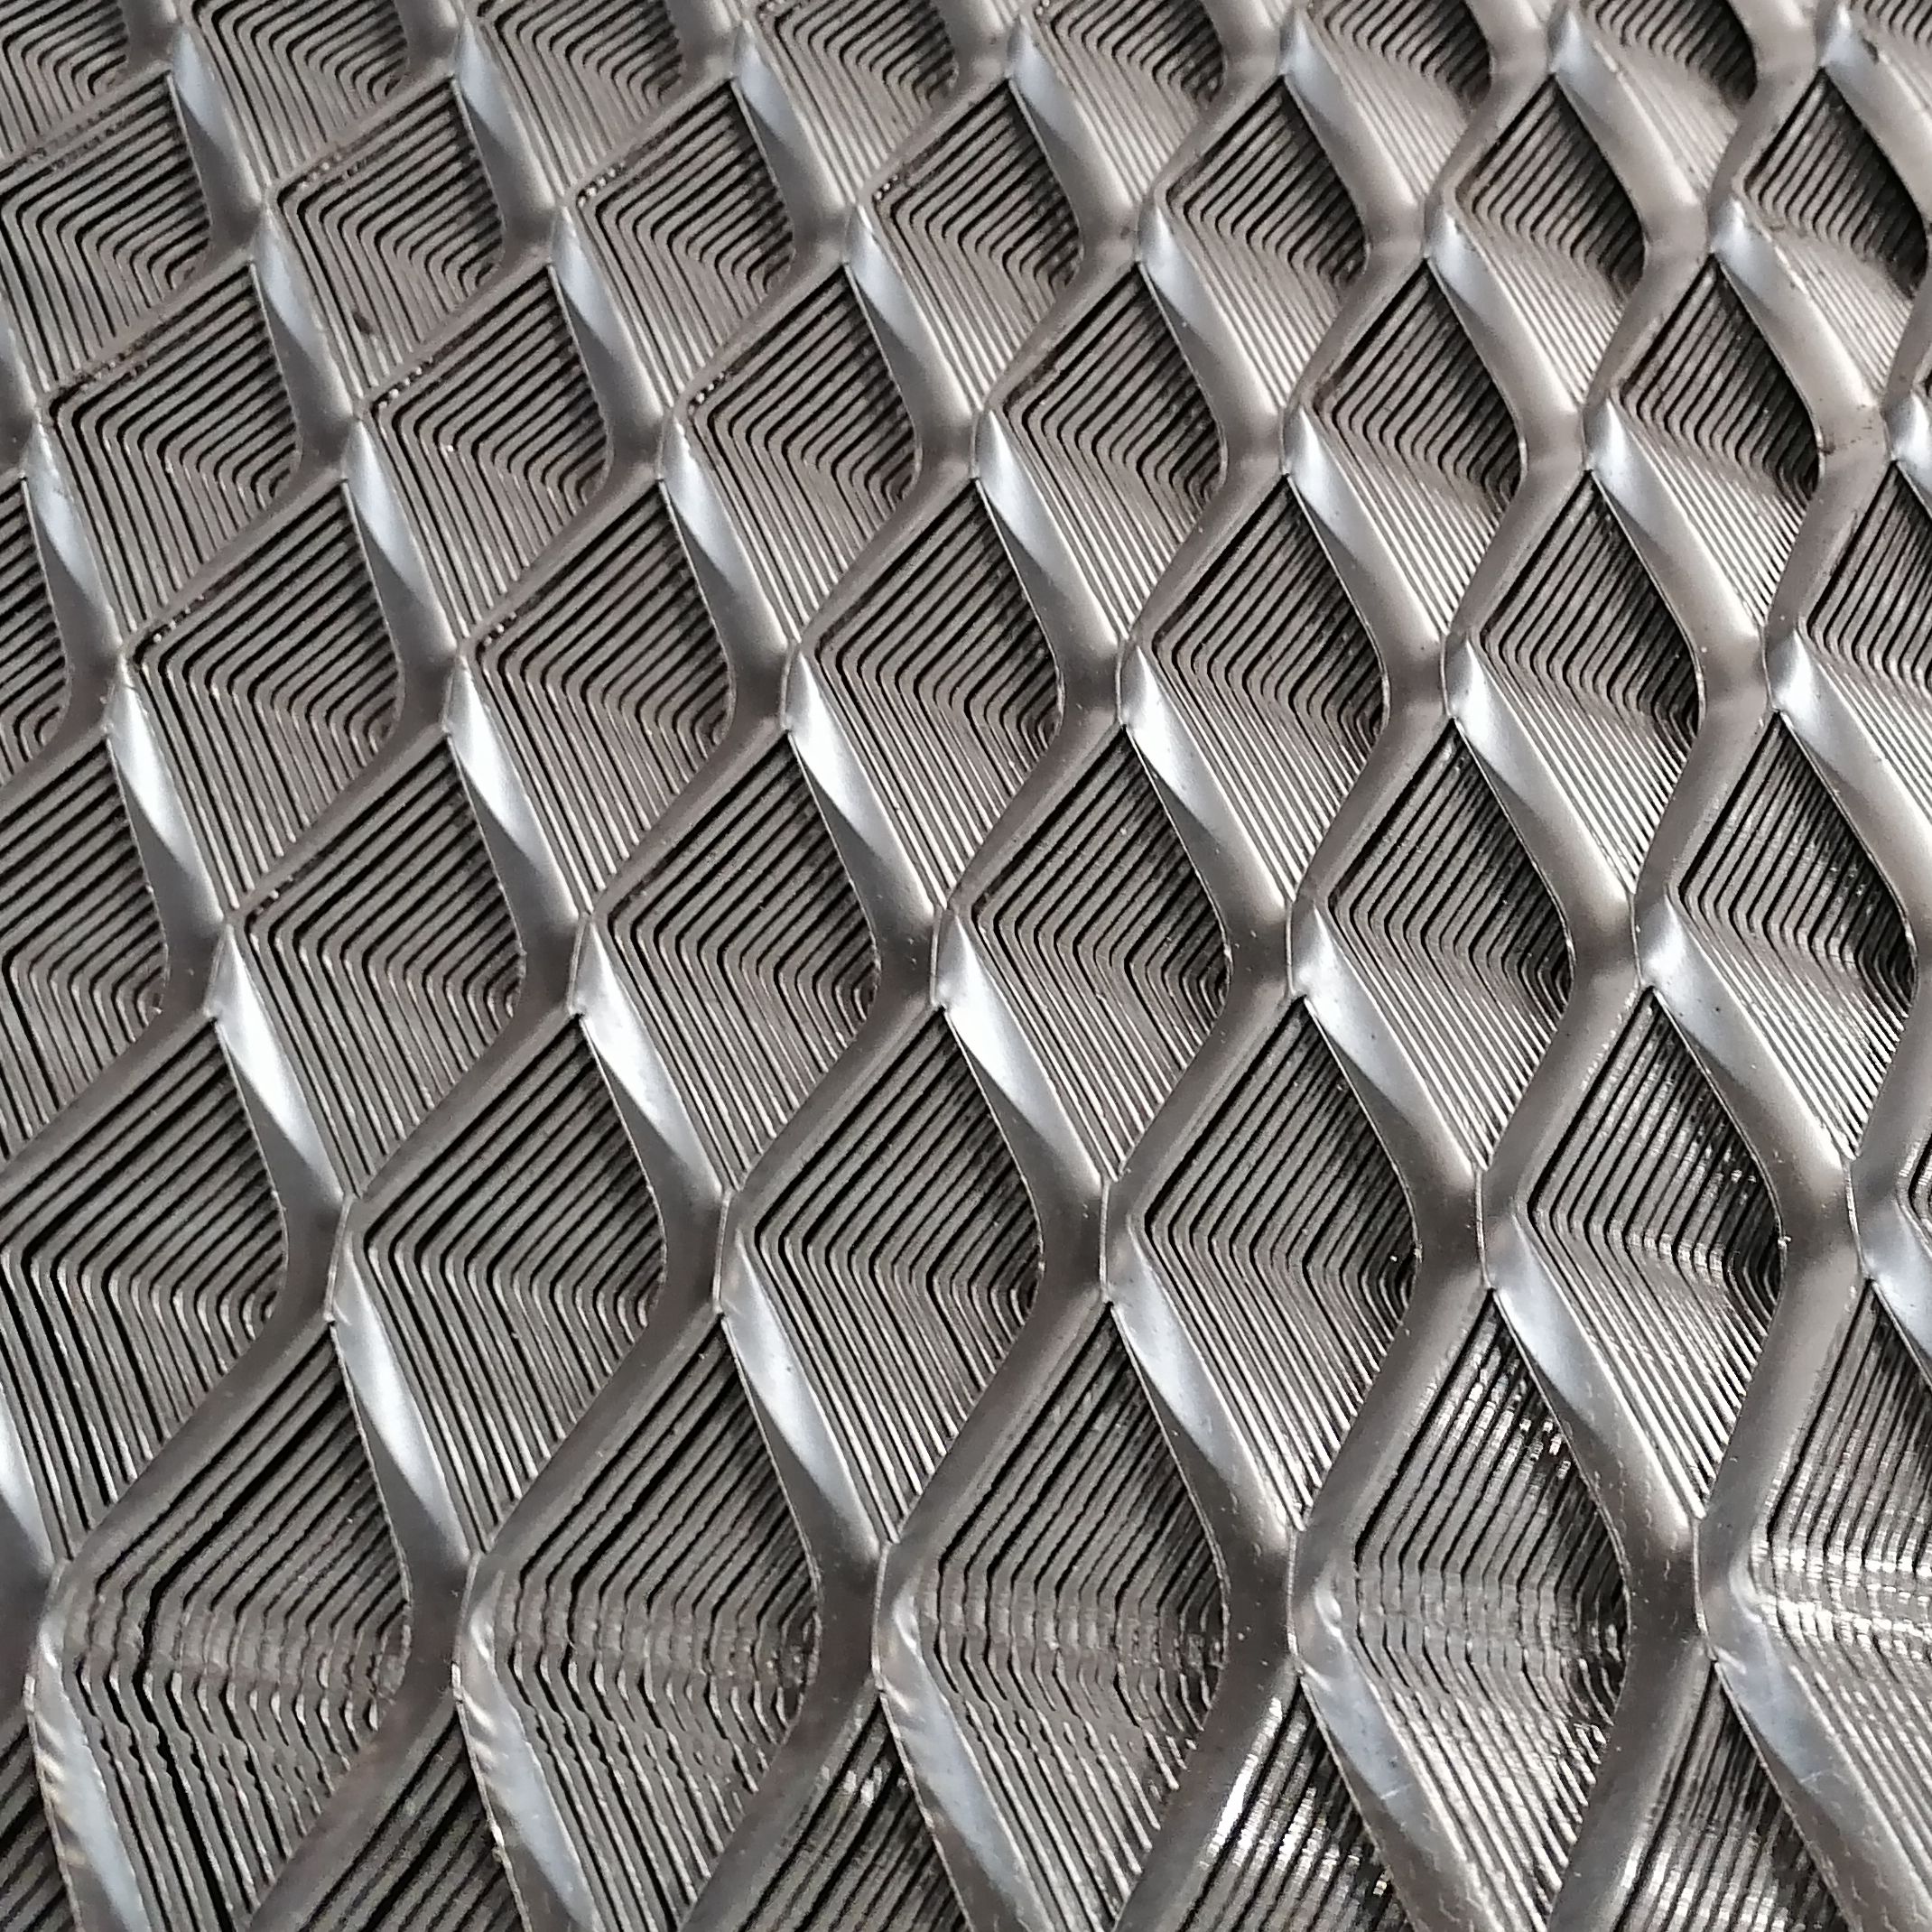 Expanded steel mesh applications in various industries